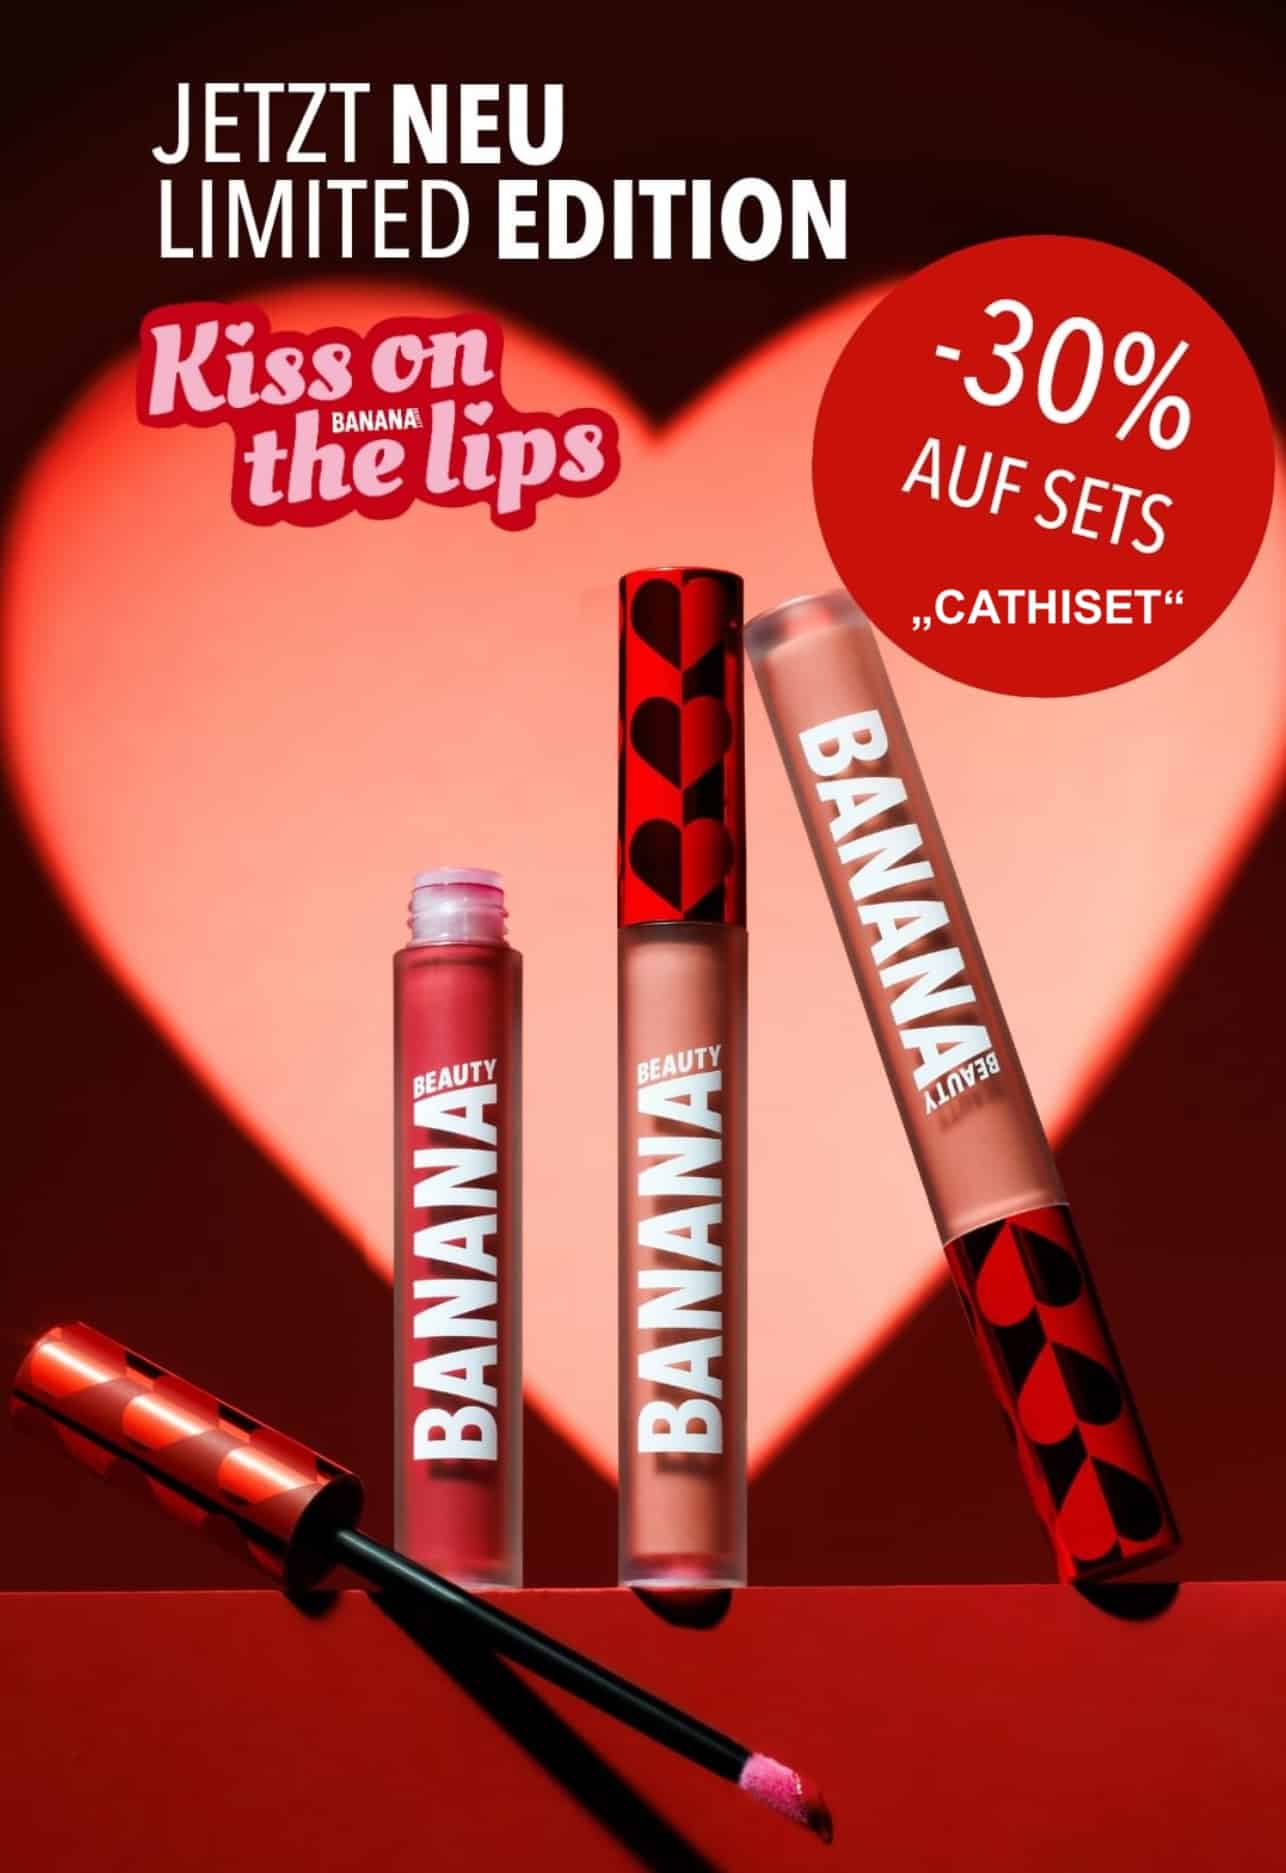 Kiss on Banana Beauty Liquid Lips Erfahrungen Valentins Edition